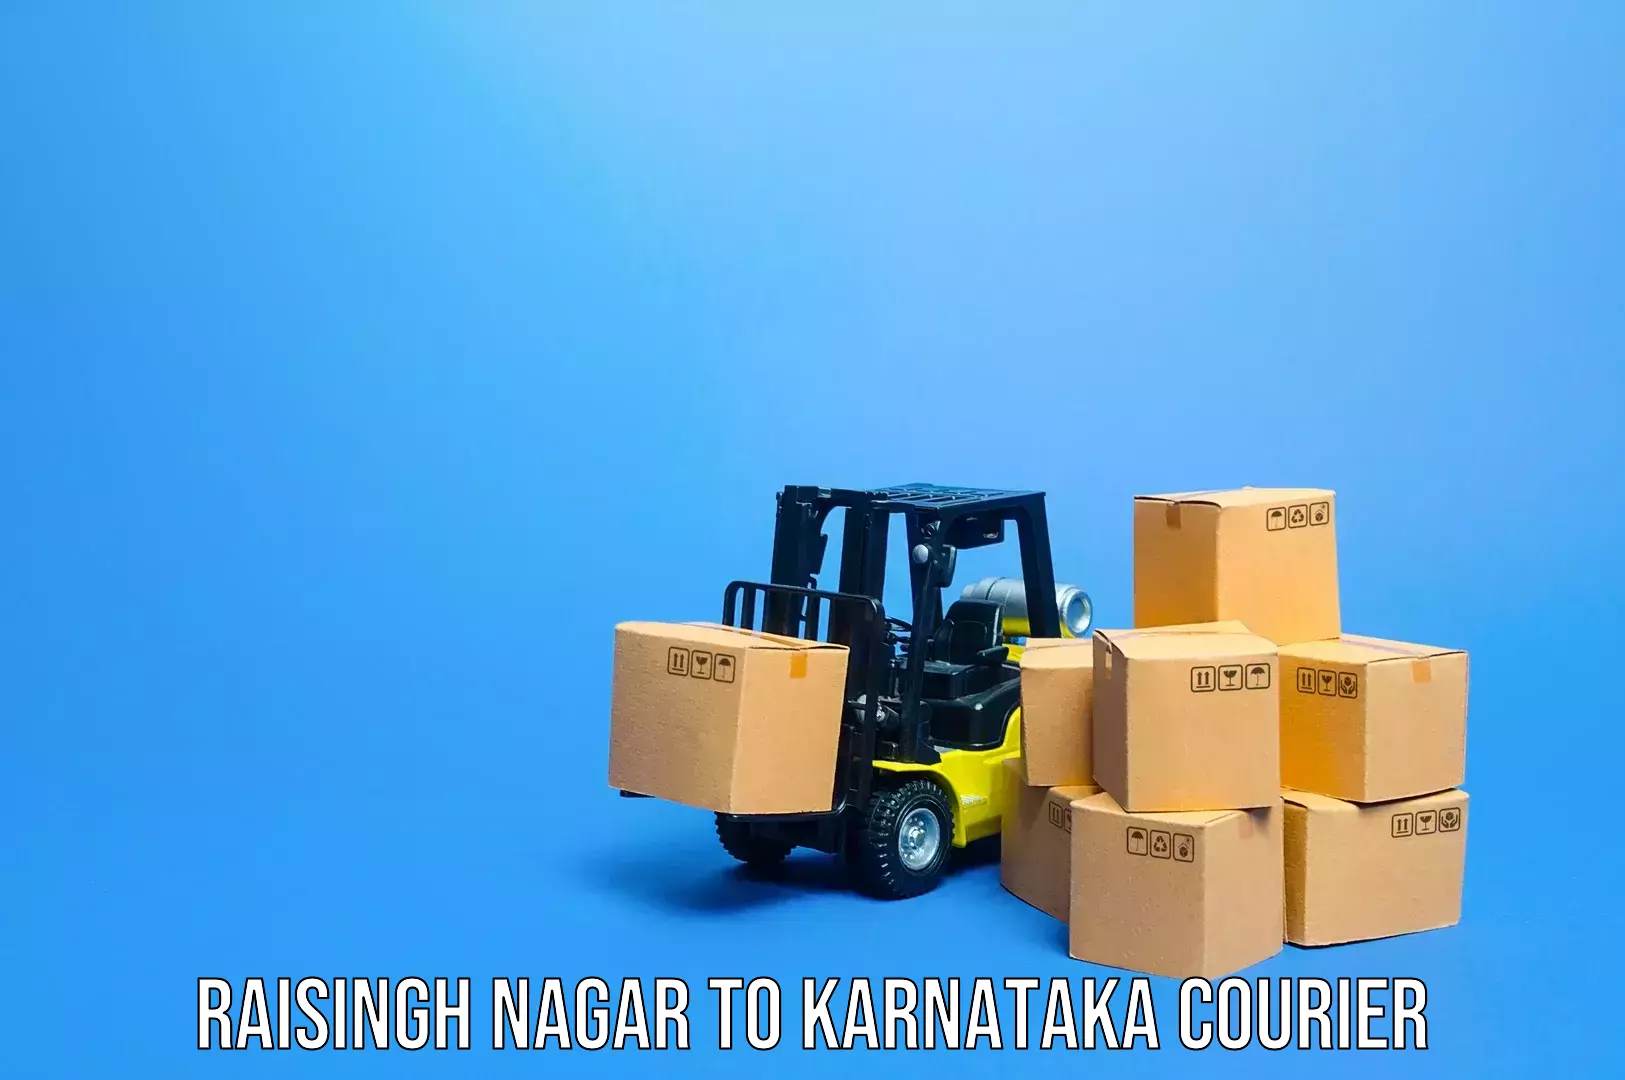 Baggage transport innovation Raisingh Nagar to Karnataka